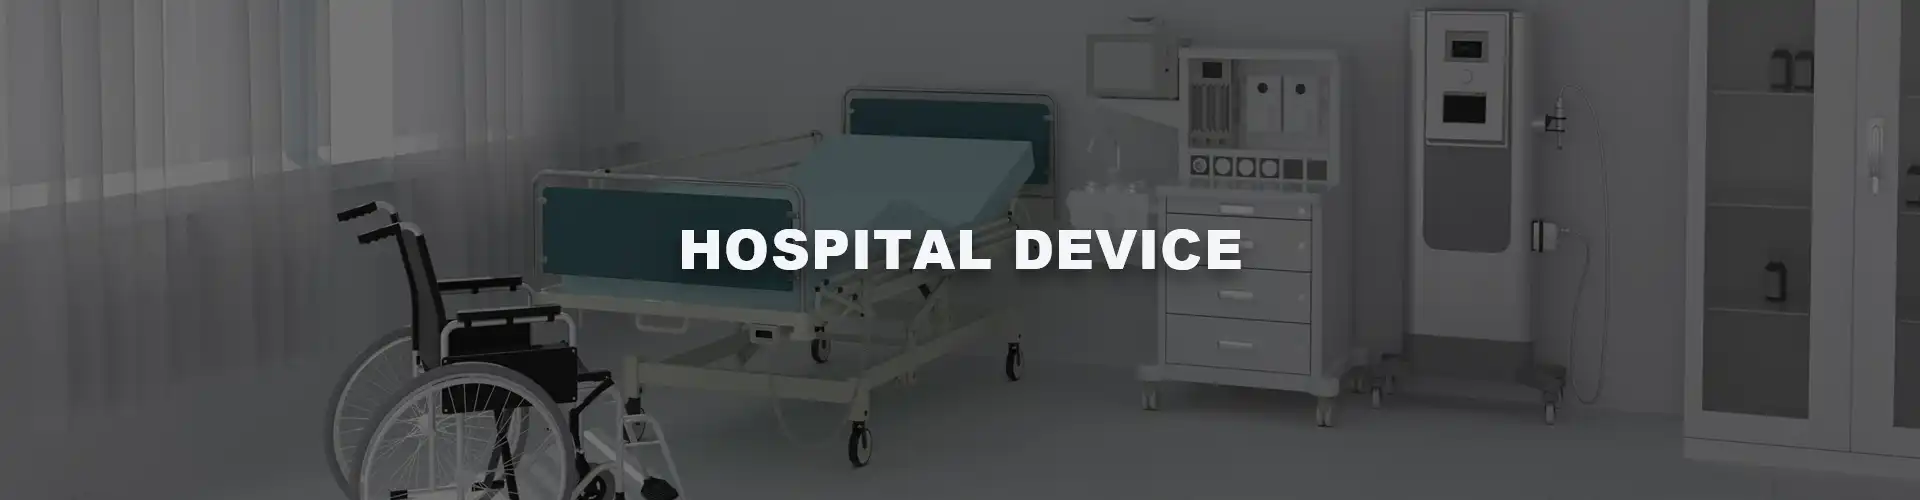 Hospital Device